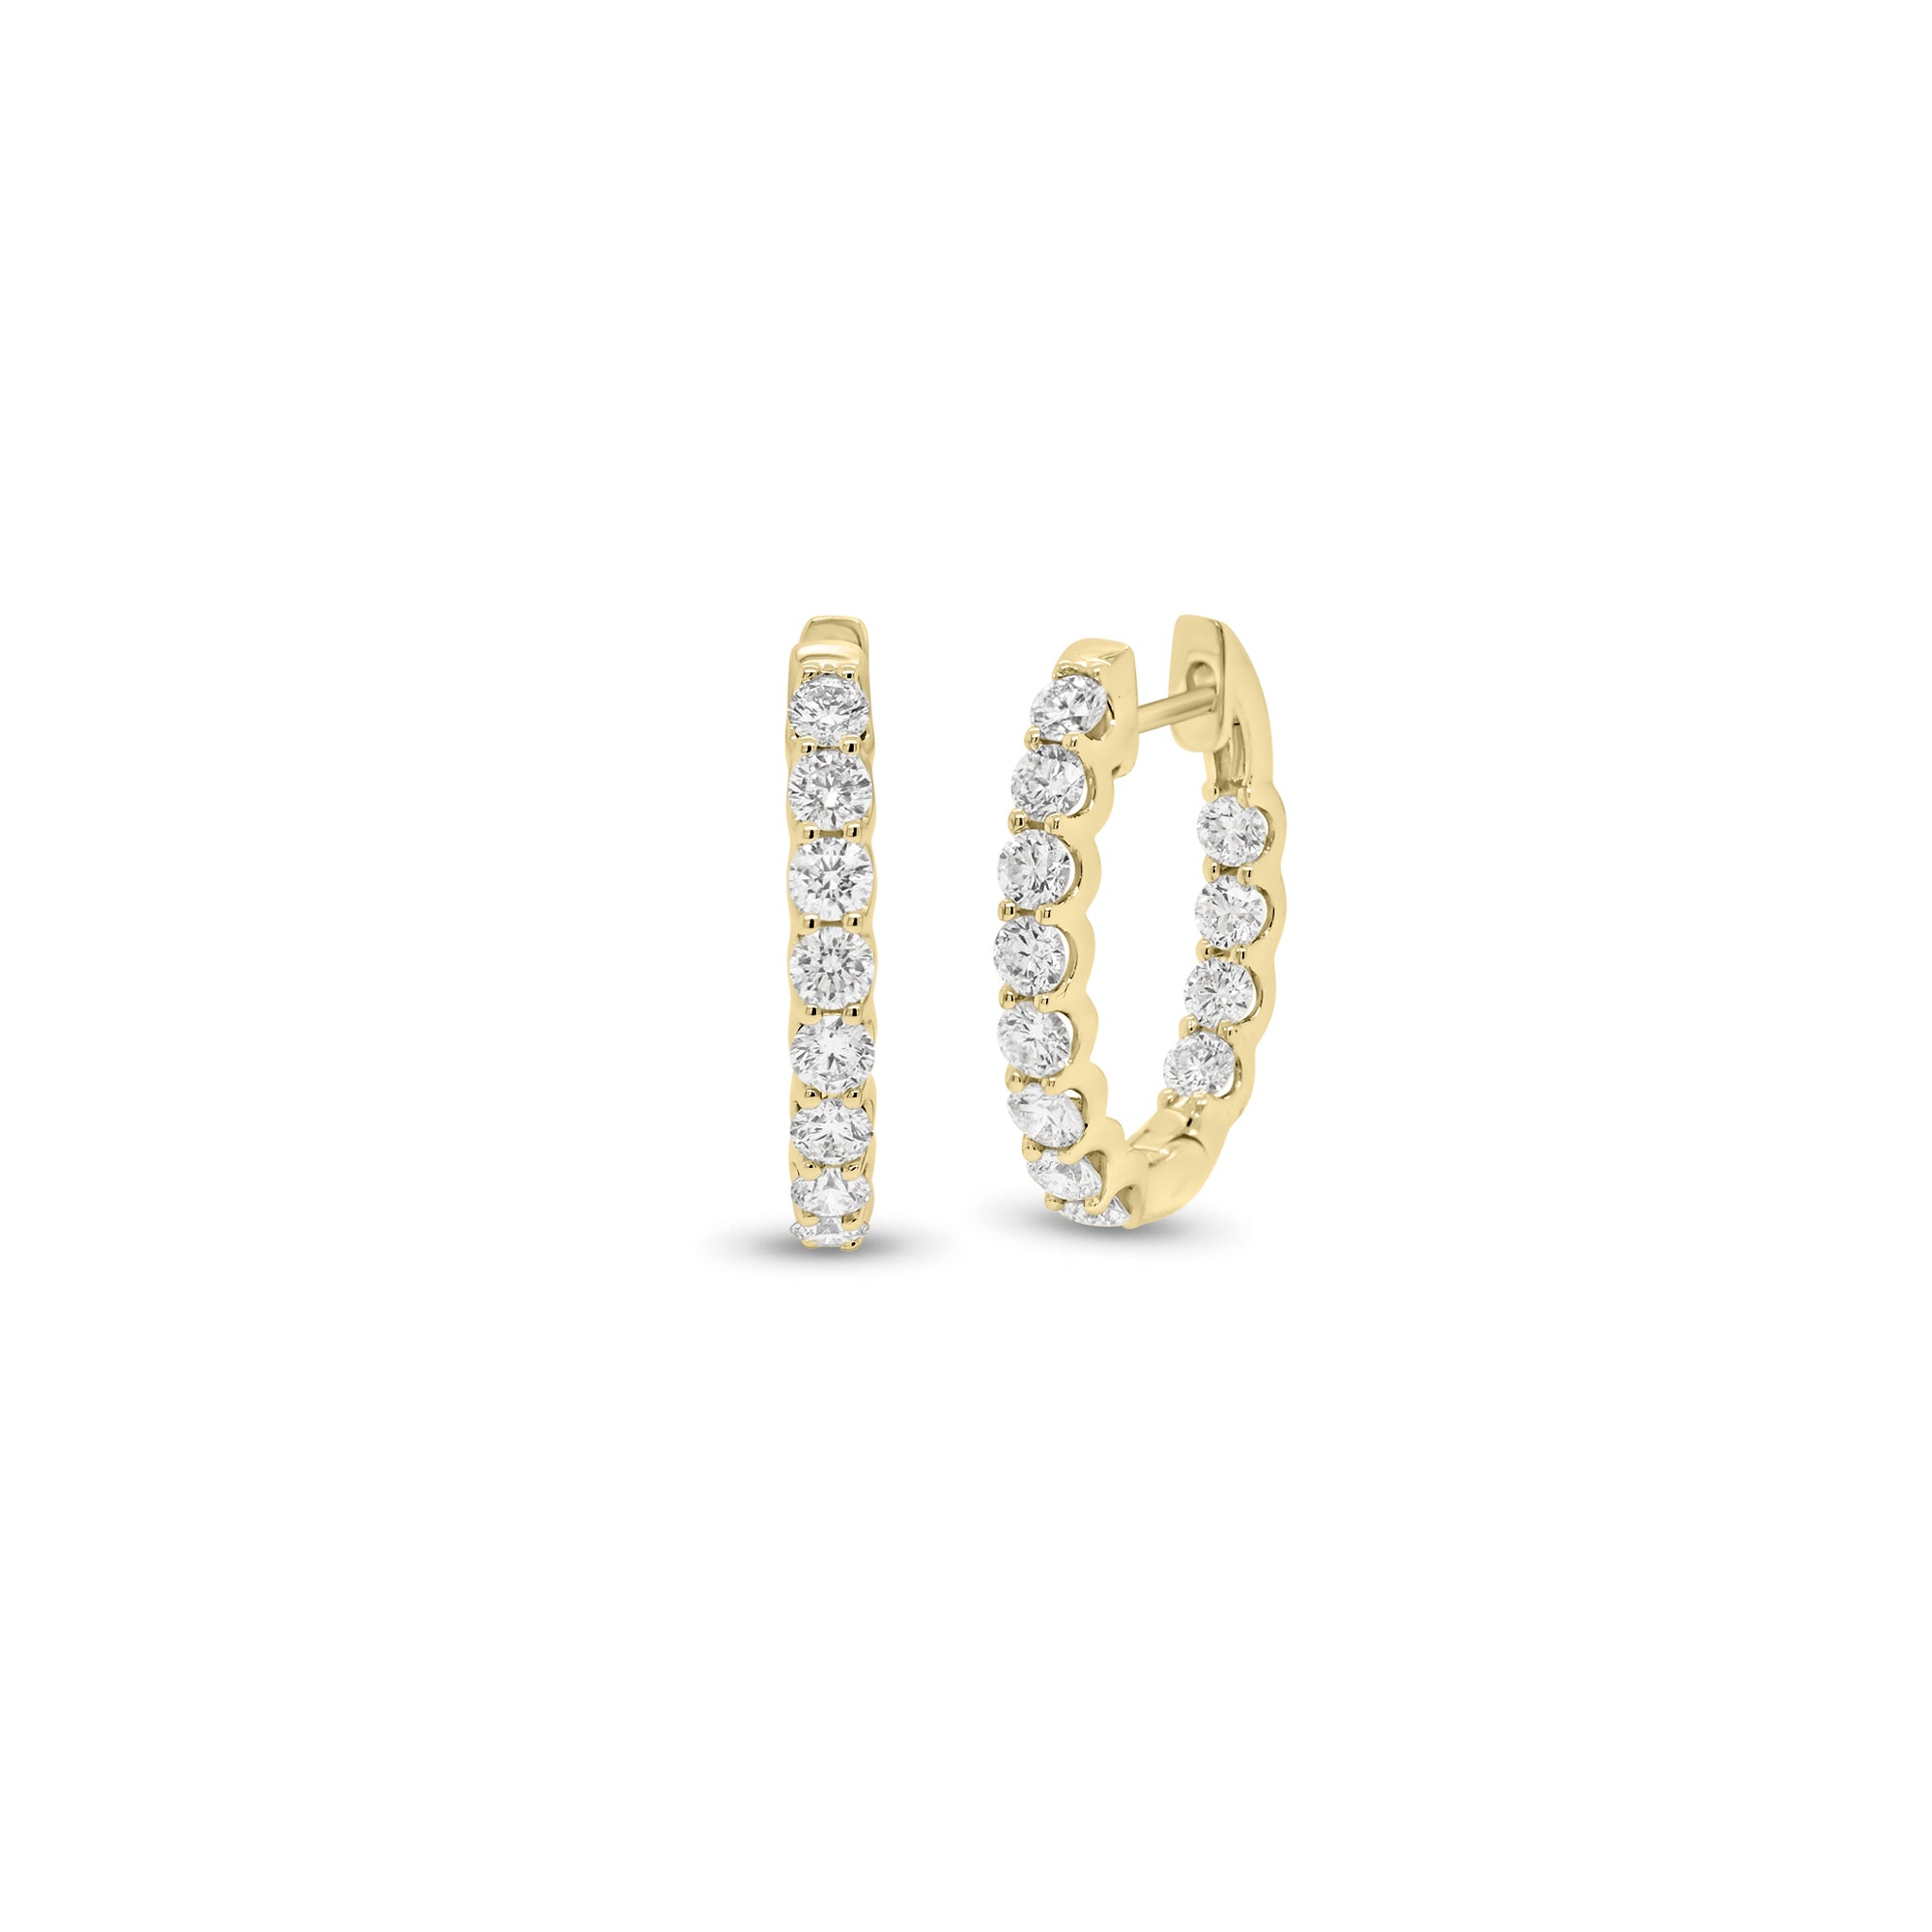 1ct Diamond Interior & Exterior Huggie Earrings - 18K gold weighing 2.83 grams  - 24 round diamonds weighing 1.05 carats